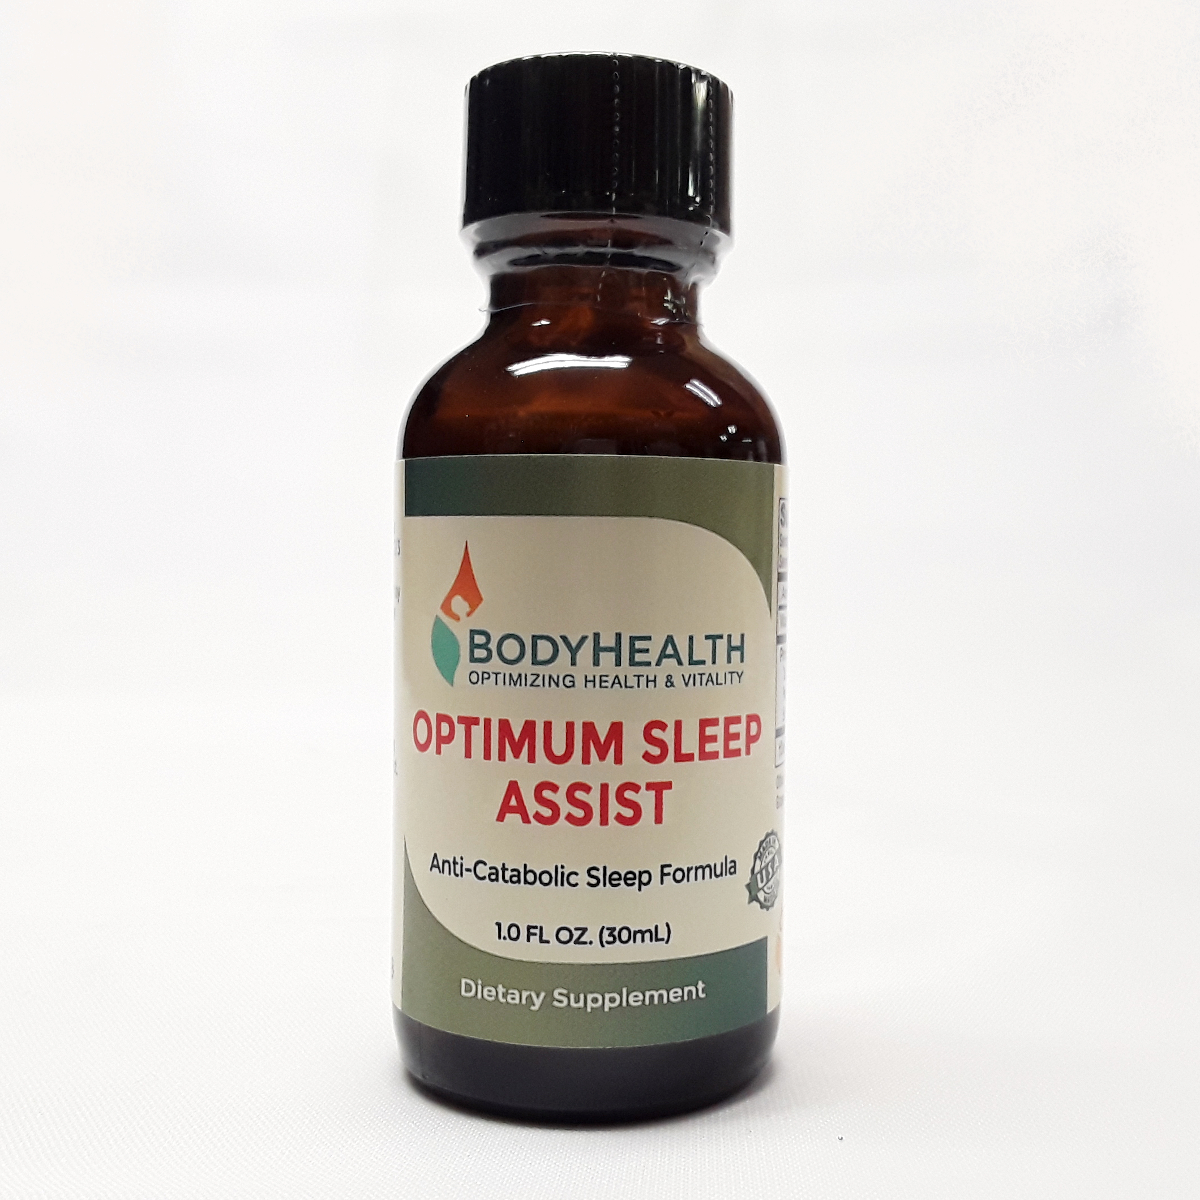 BodyHealth Optimum Sleep Assist 1 fl oz Website Image View